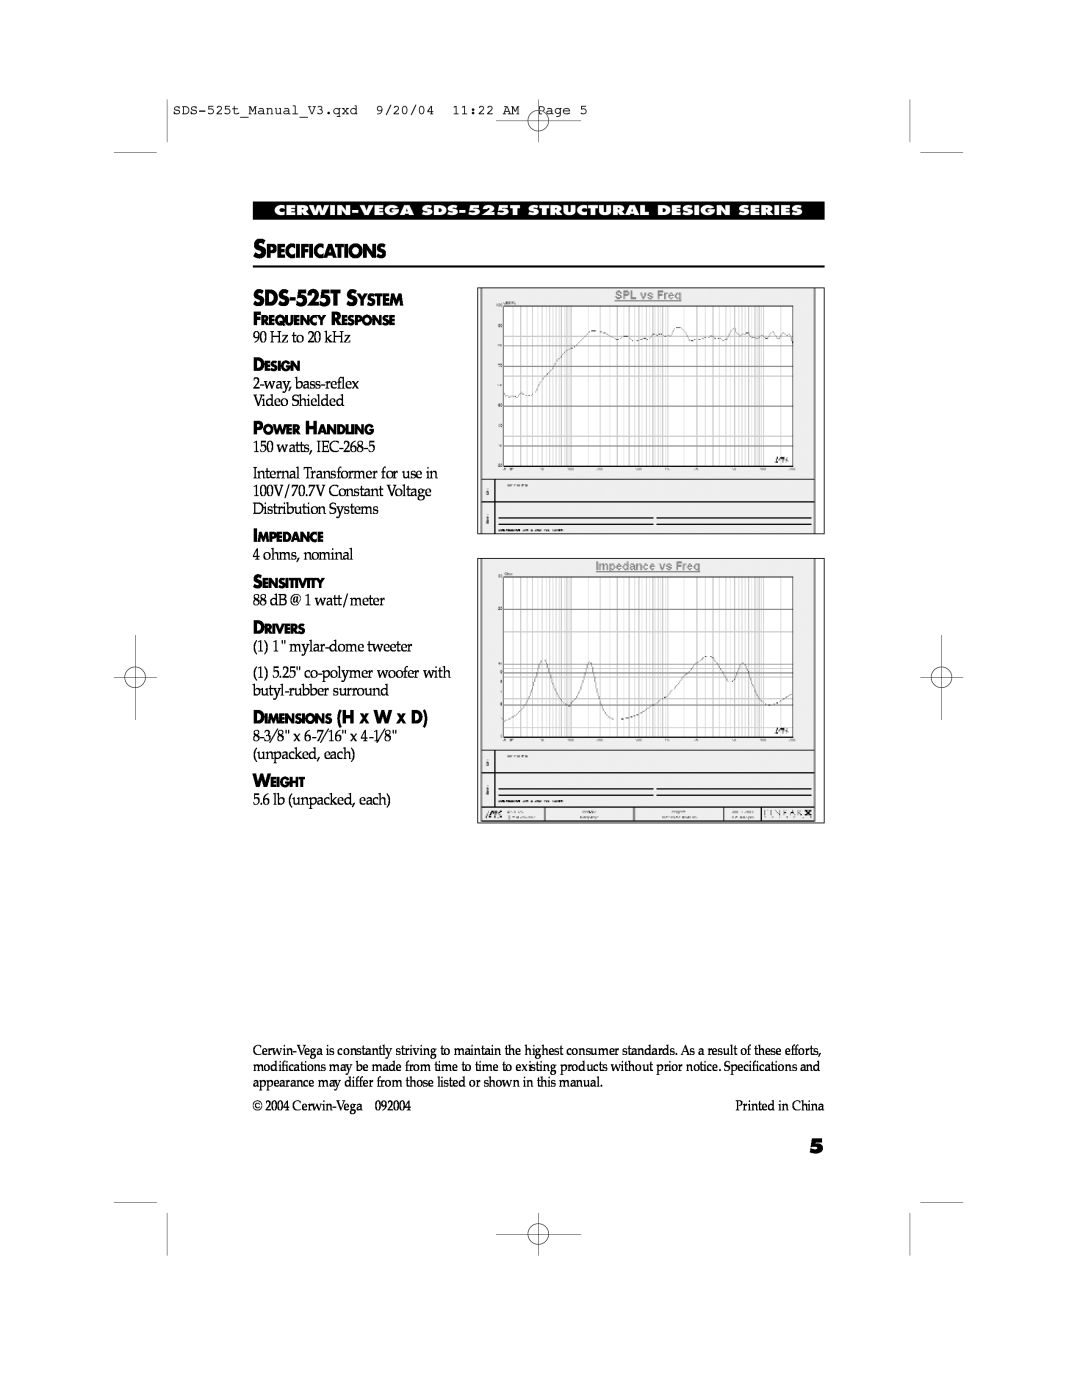 Cerwin-Vega SDS-525TSYSTEM, Specifications, SDS-525t Manual V3.qxd9/20/04 11 22 AM Page, Cerwin-Vega092004, Design 